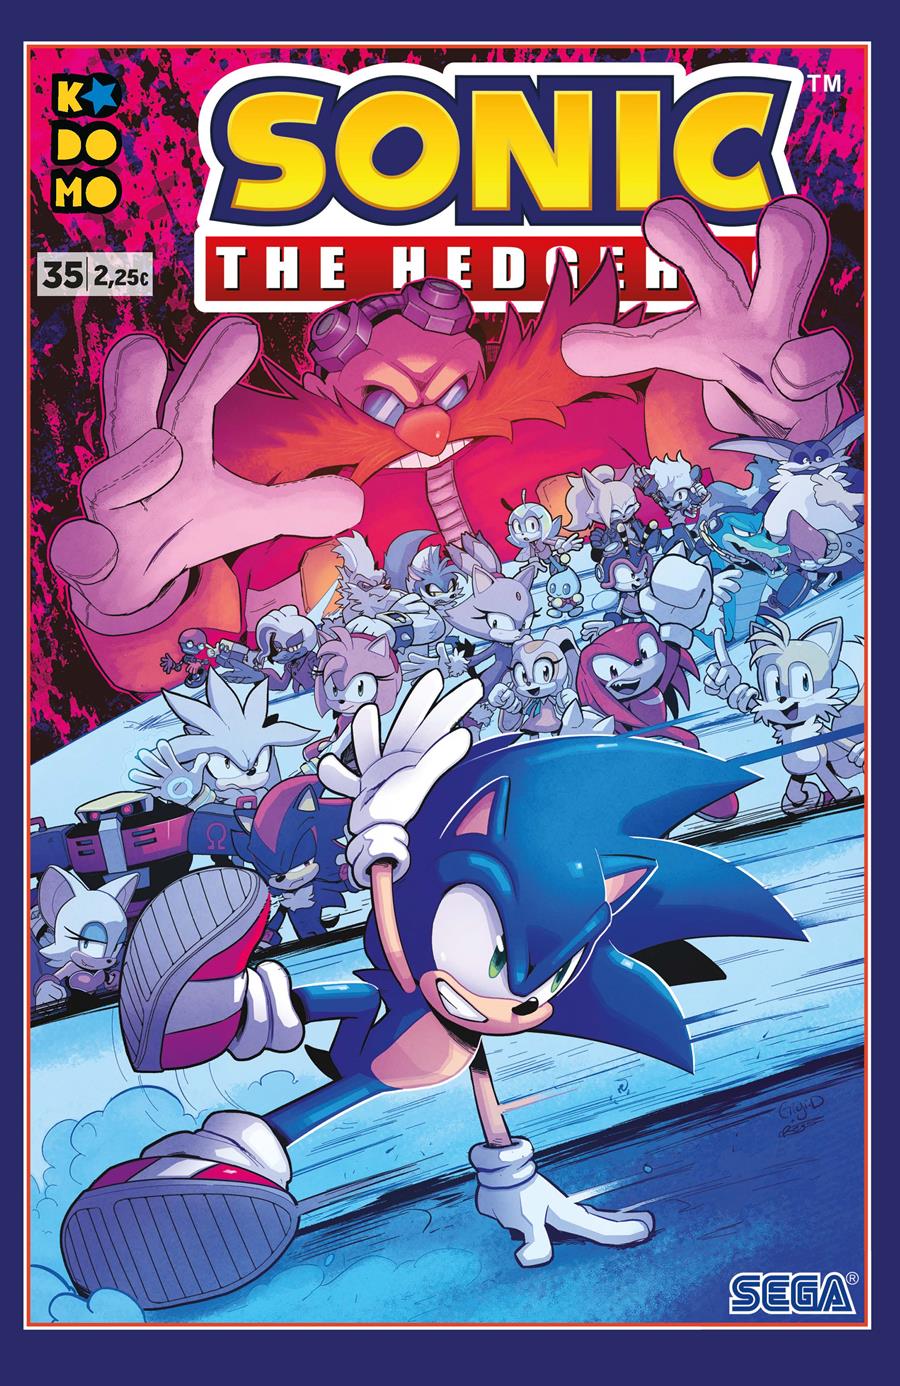 Sonic The Hedgehog núm. 35 | N0622-ECC56 | Evan Stanley, Adam Bryce Thomas | Terra de Còmic - Tu tienda de cómics online especializada en cómics, manga y merchandising